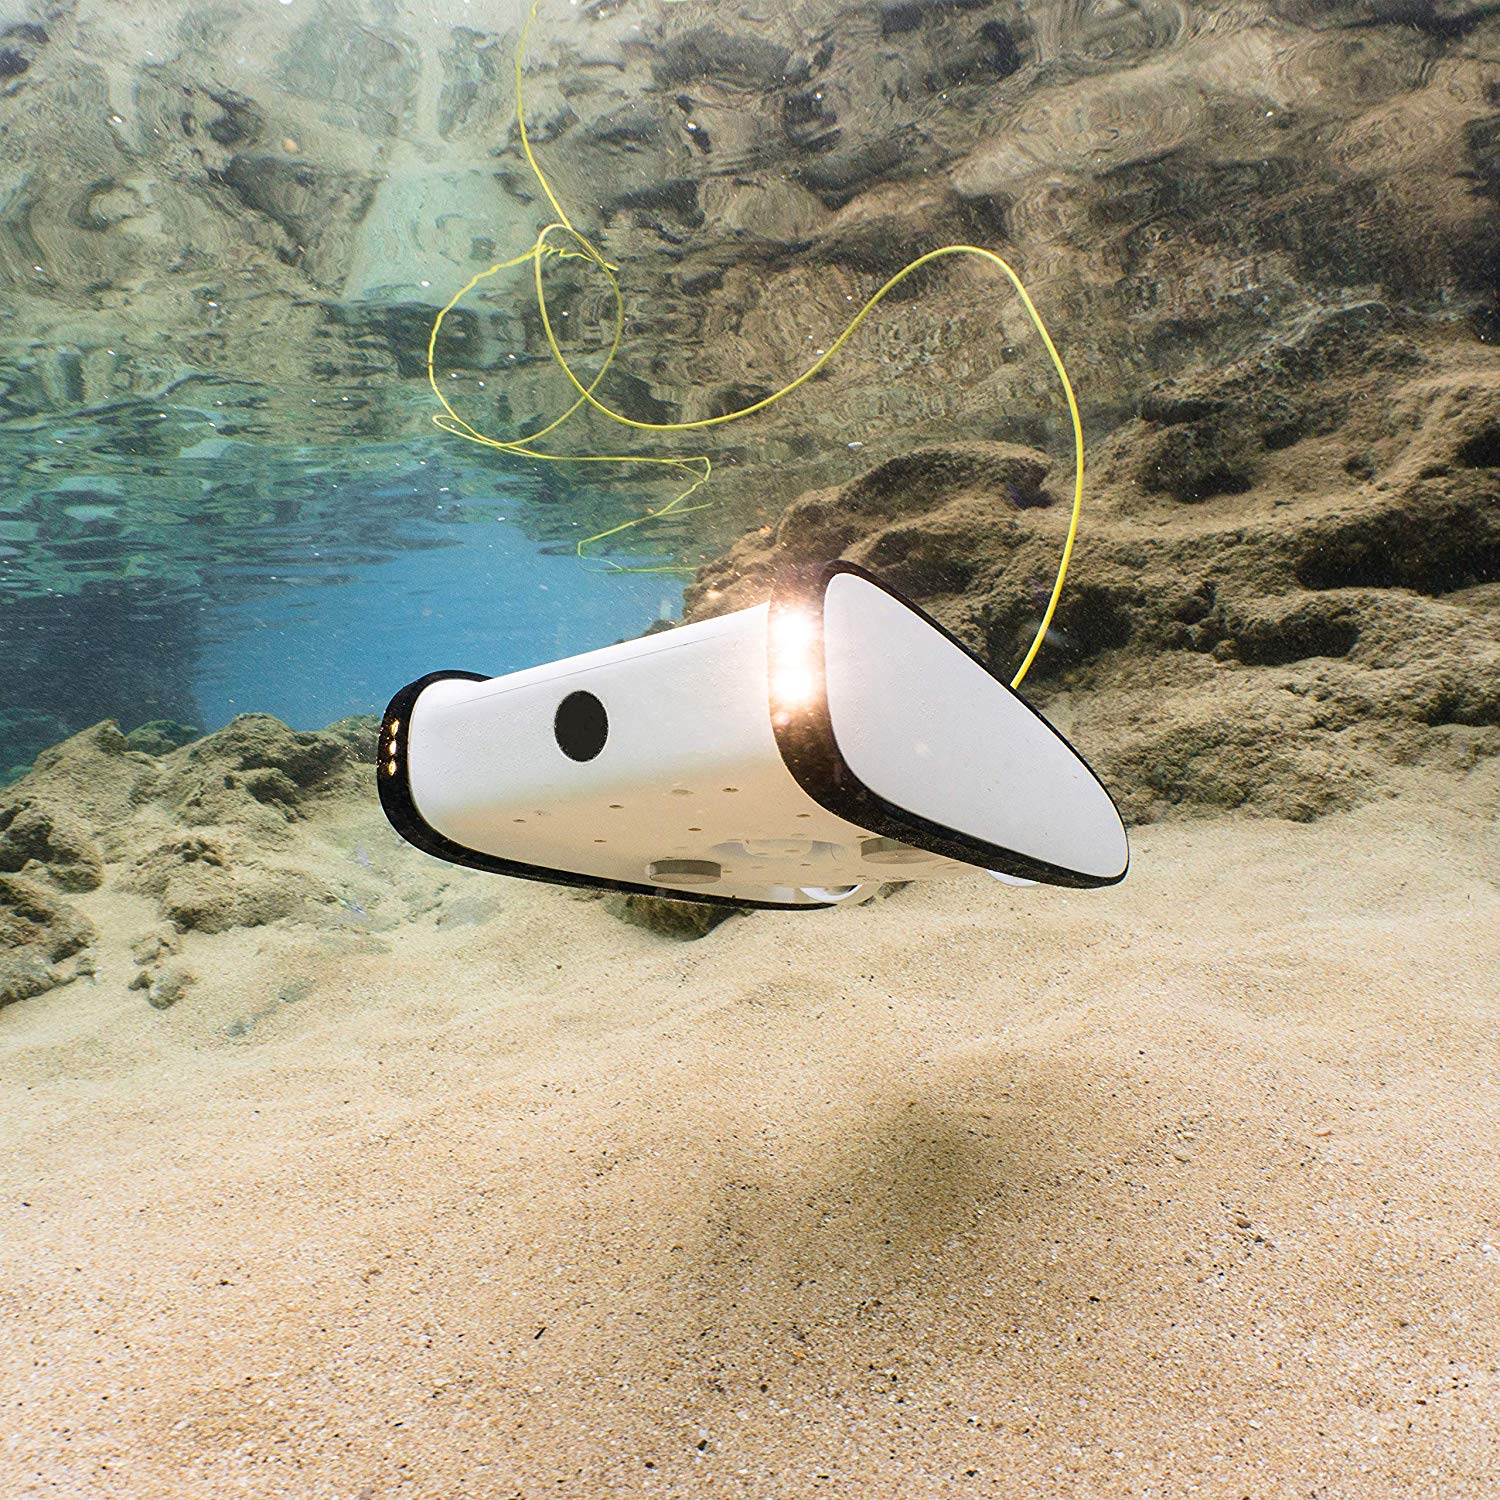 trident underwater drone 2 image 